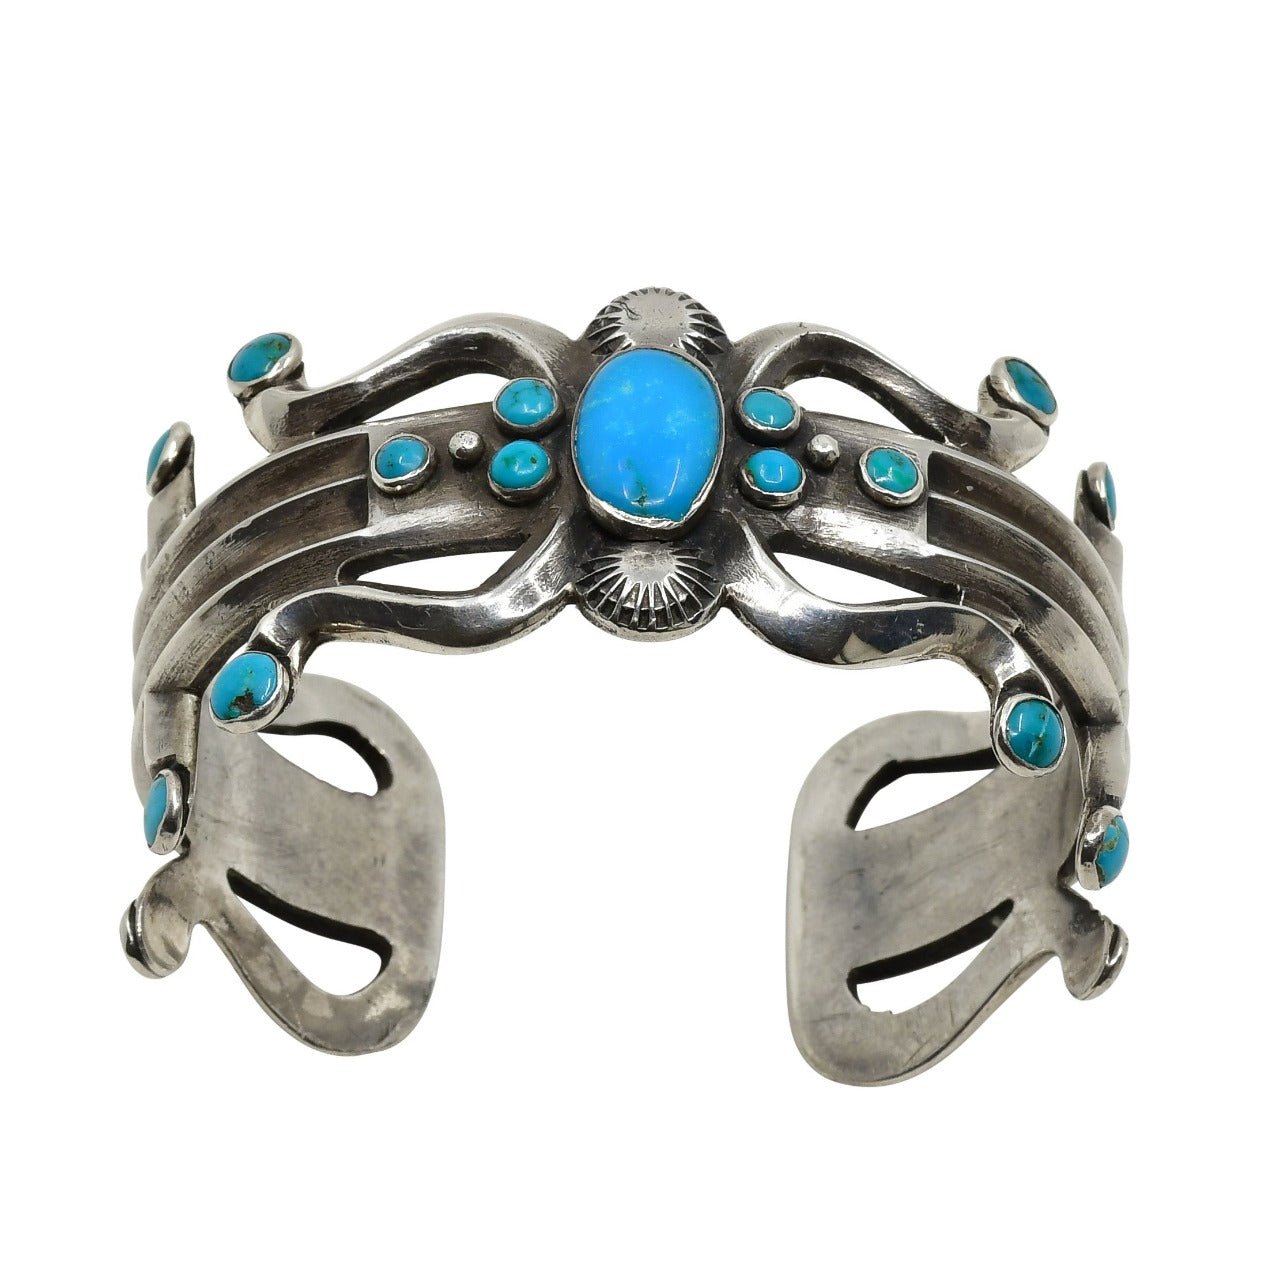 Early Zuni Bracelet Attributed to Juan De Dios - Turquoise & Tufa